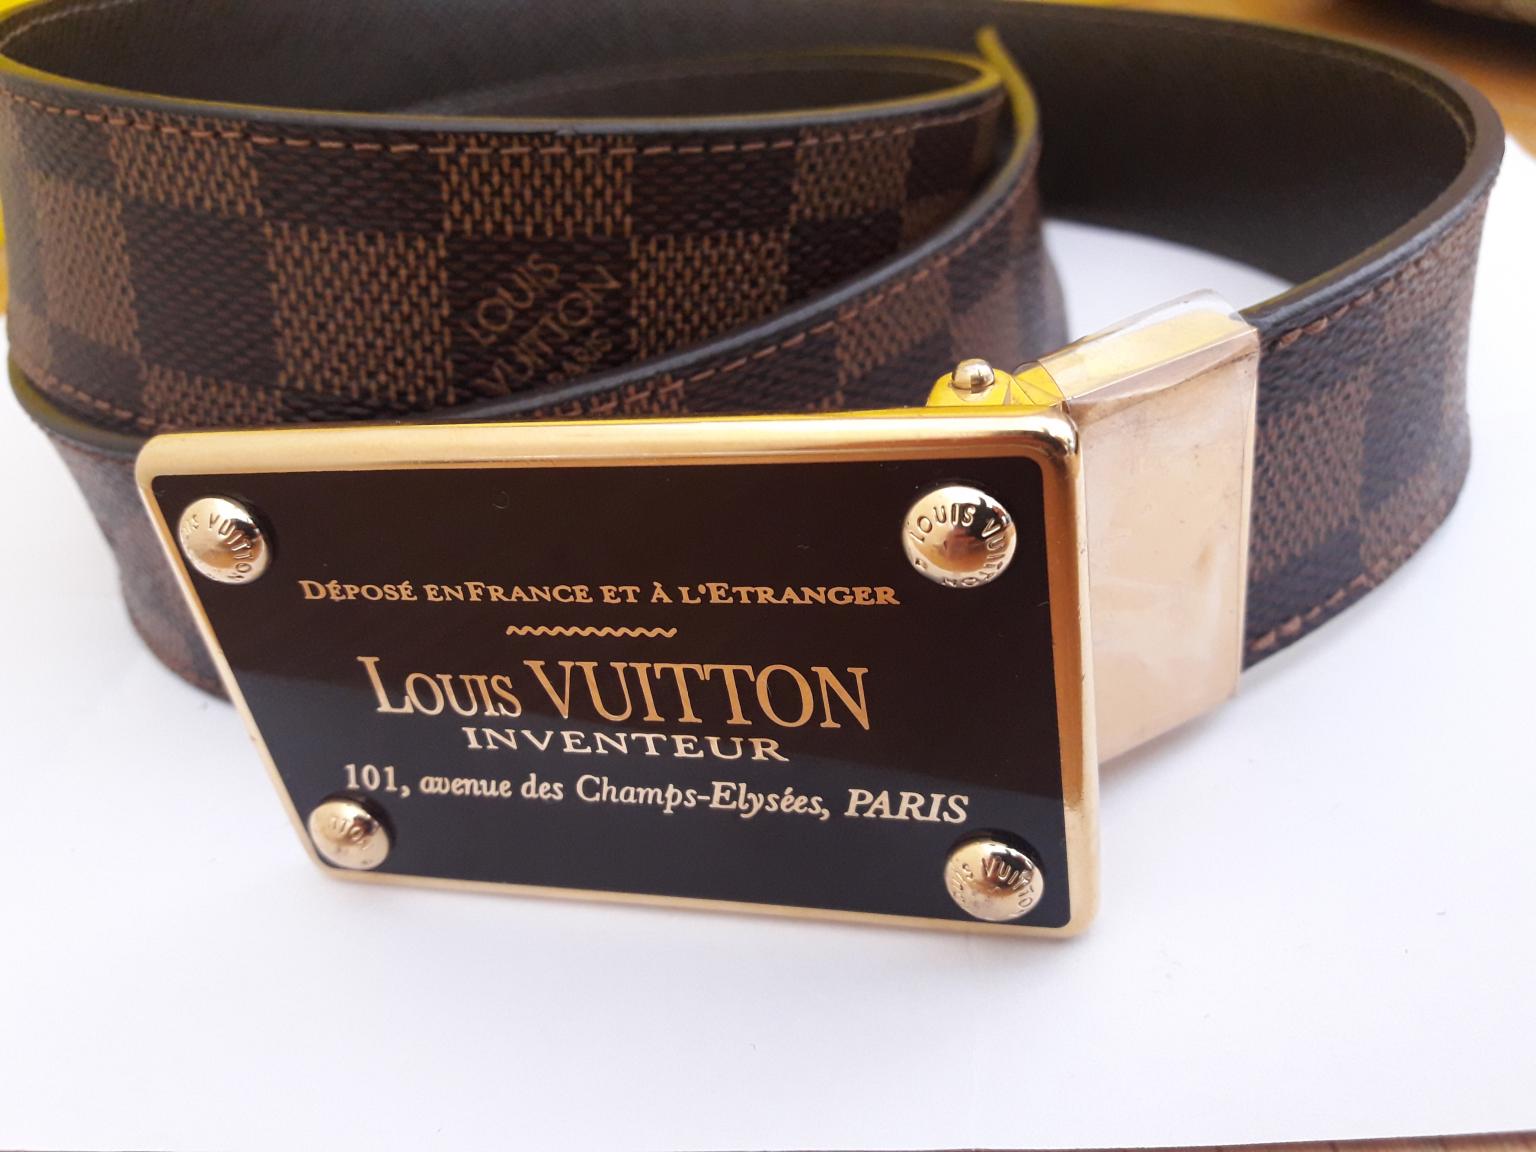 Louis Vuitton Mens Belt Inventeur Size 90/36 in EC2V Temple for £340.00 for sale | Shpock